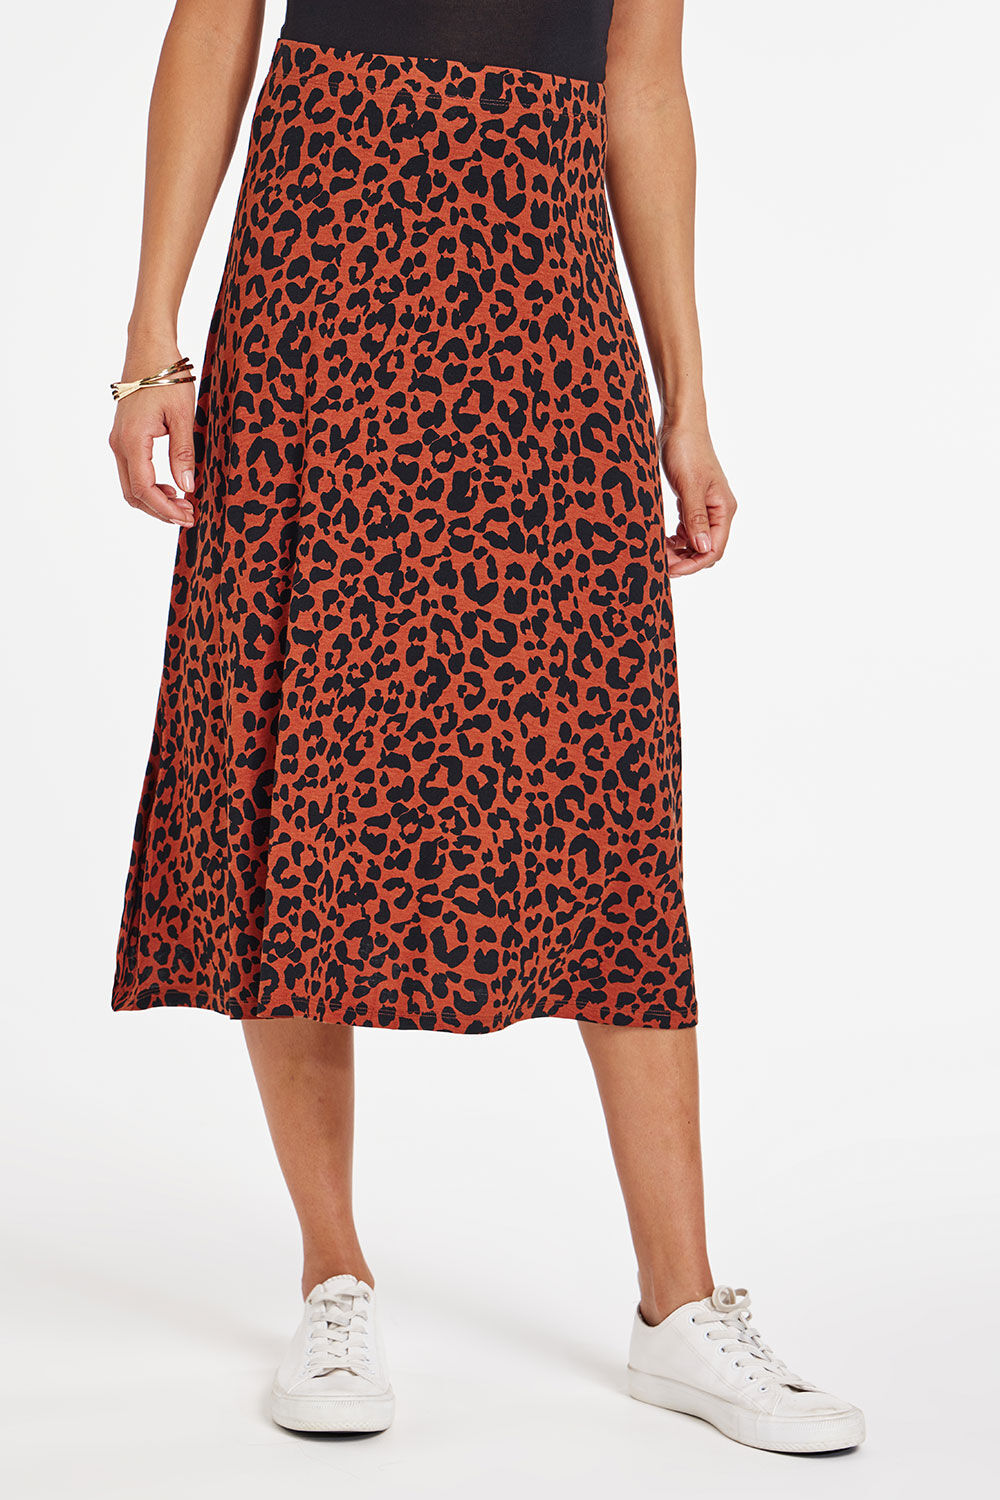 Bonmarche Brown Animal Print Flippy Jersey Elasticated Skirt, Size: 16